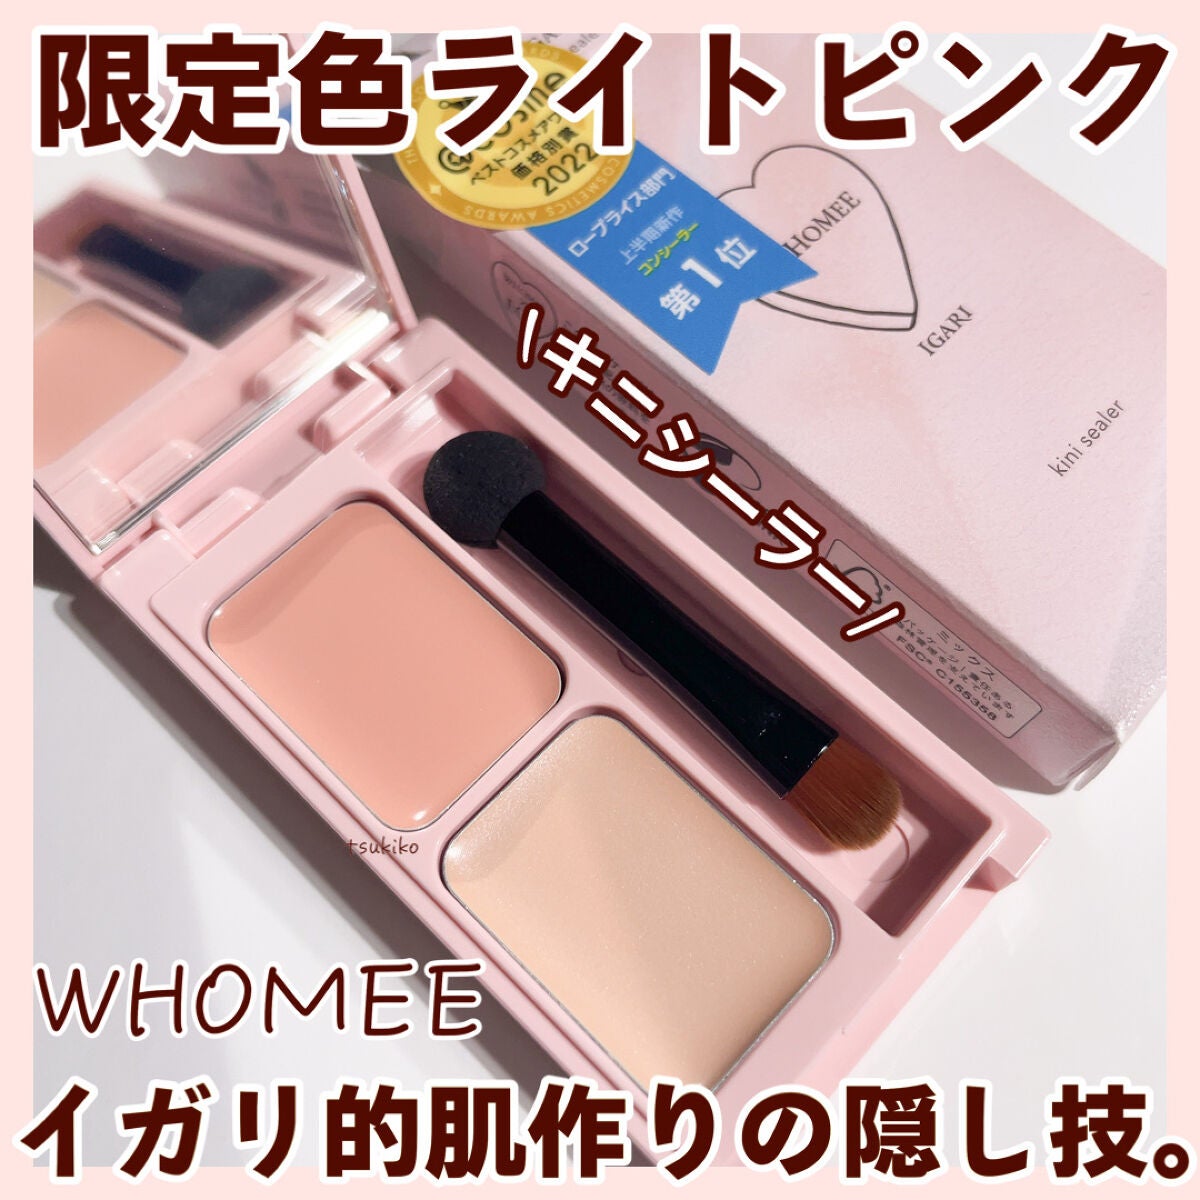 WHOMEE フーミー キニシーラー ライトピンク - ベースメイク/化粧品